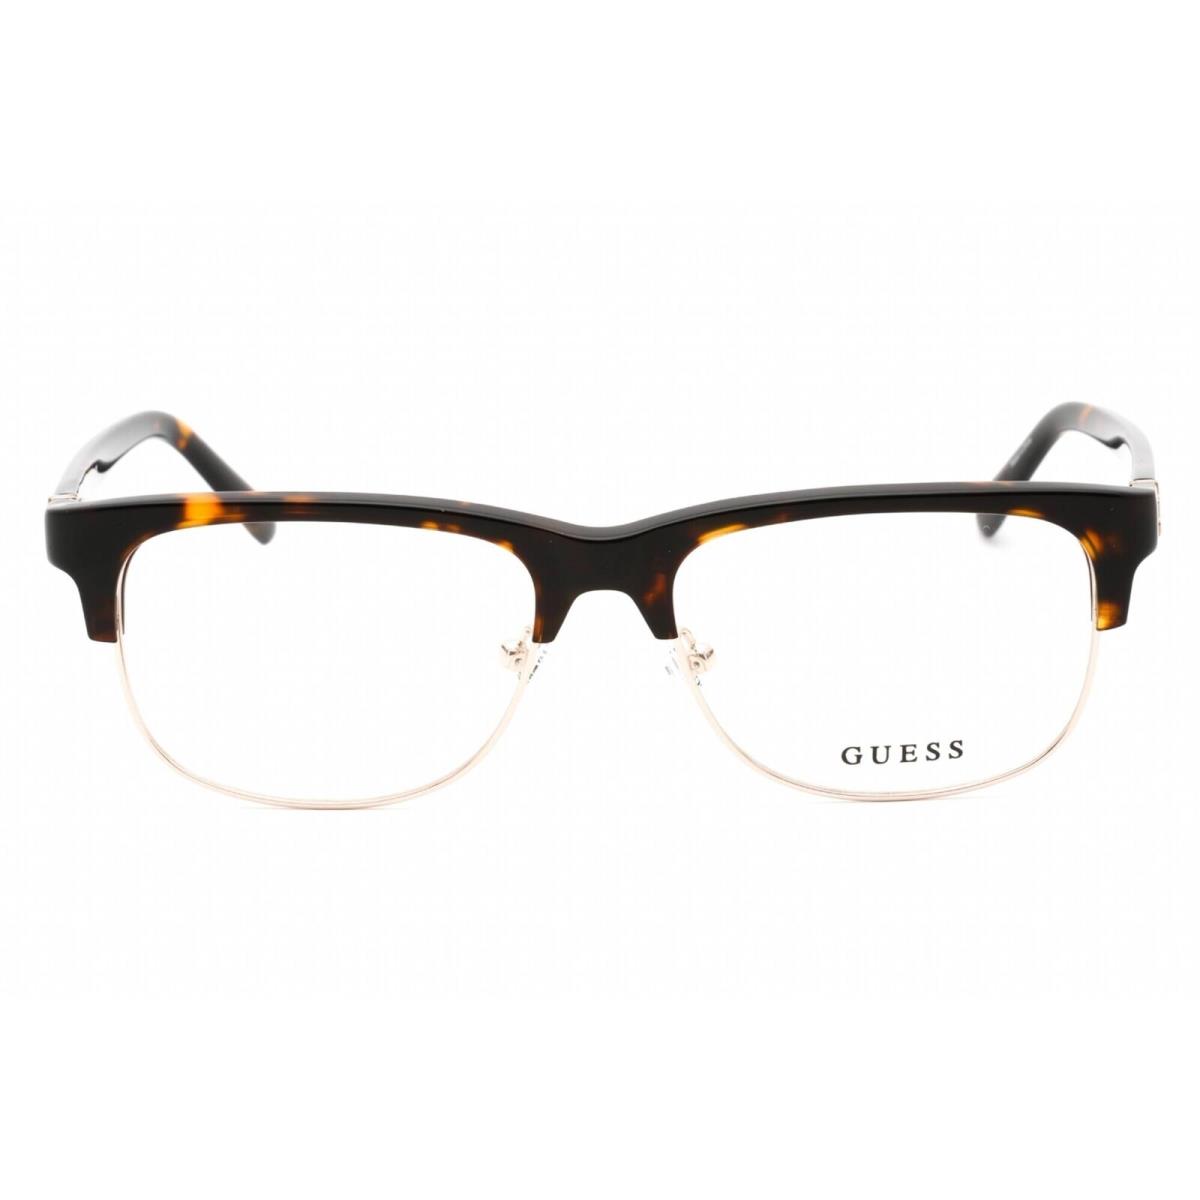 Guess Men`s Eyeglasses Clear Demo Lens Dark Havana Rectangular Frame GU50081 052